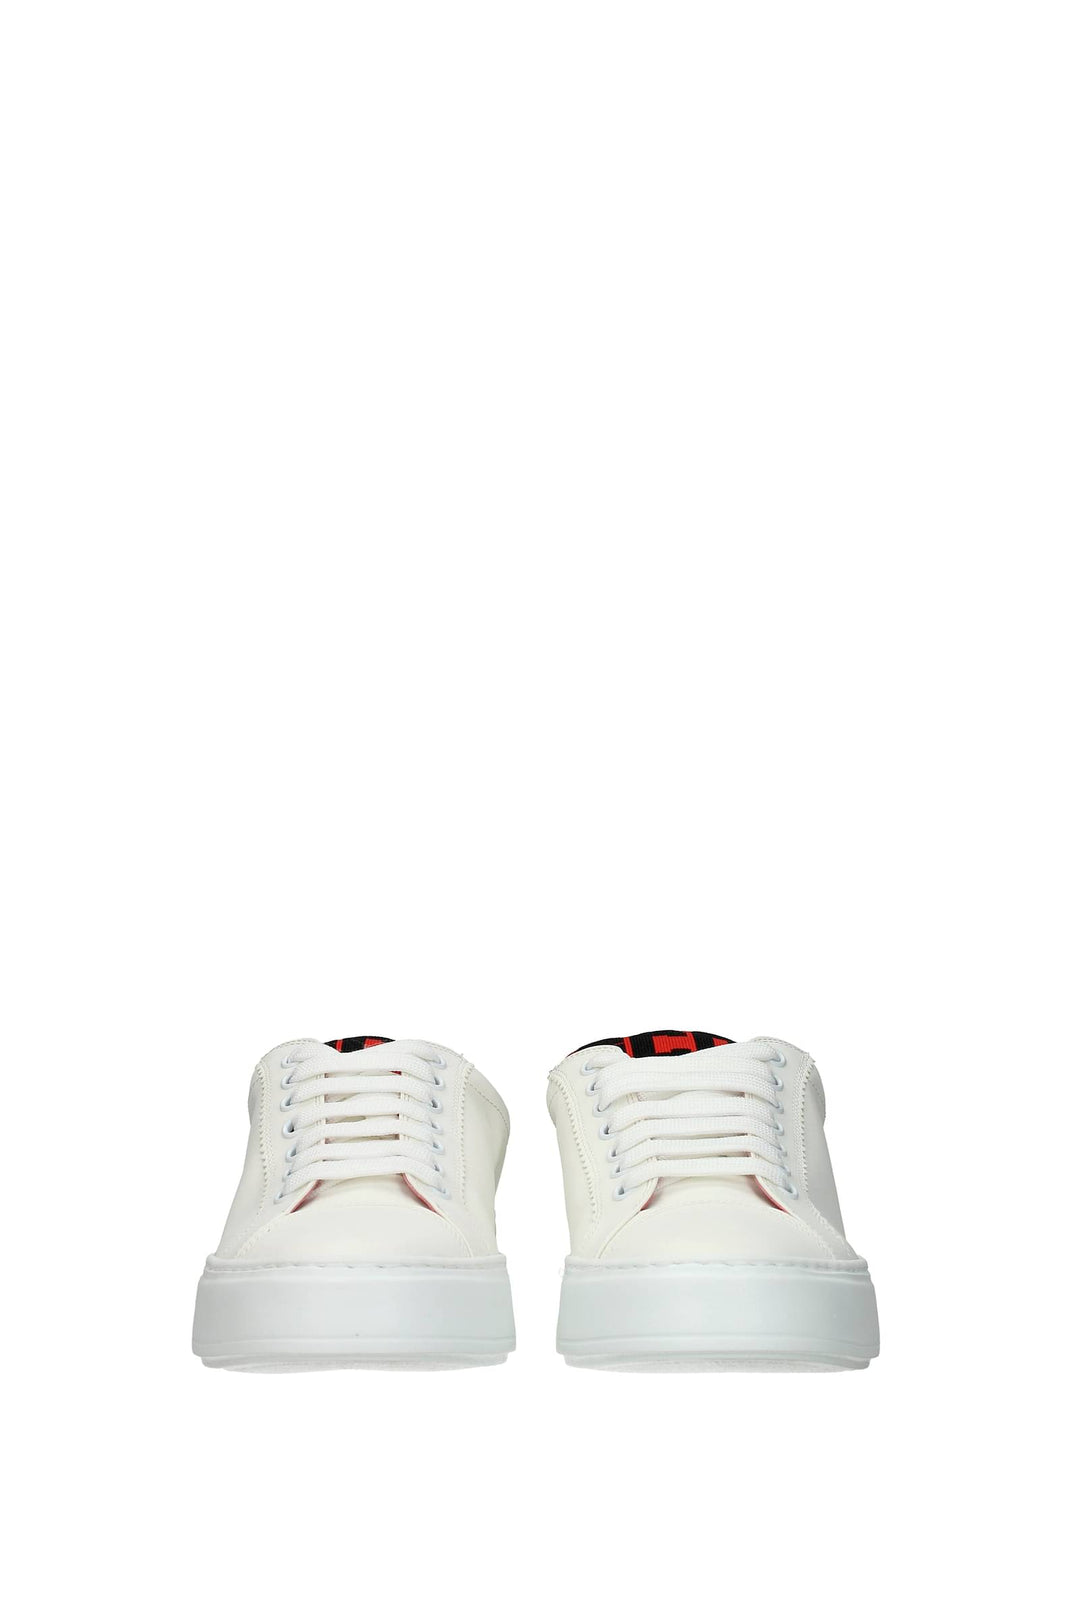 Sneakers Poliestere Bianco Rosso - GCDS - Uomo